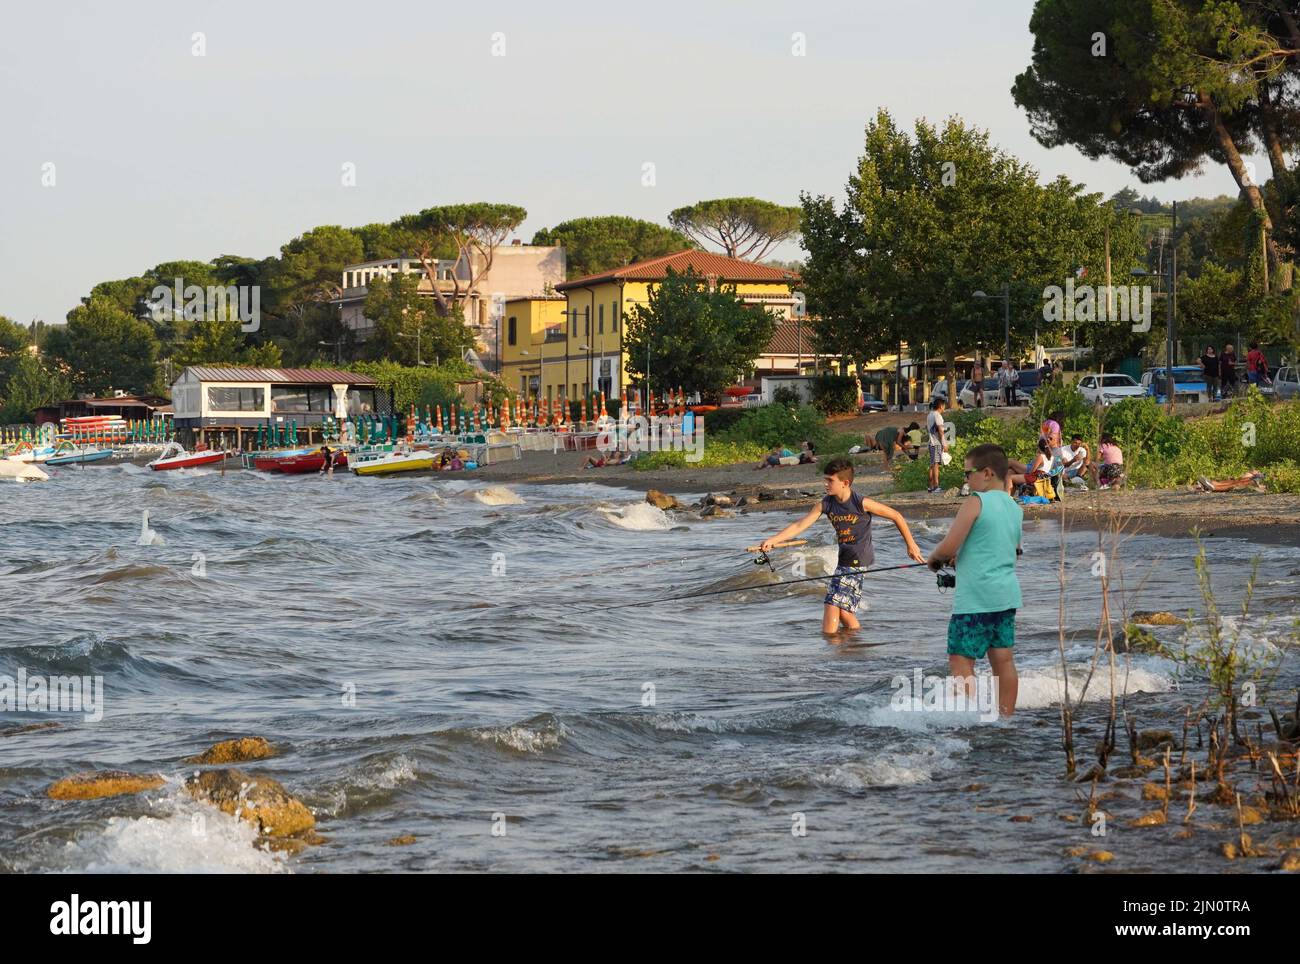 Bracciano. 7. August 2022. Am 7. August 2022 winkeln Menschen im Bracciano-See in Bracciano, Italien, nach Fischen. Quelle: Jin Mamengni/Xinhua/Alamy Live News Stockfoto